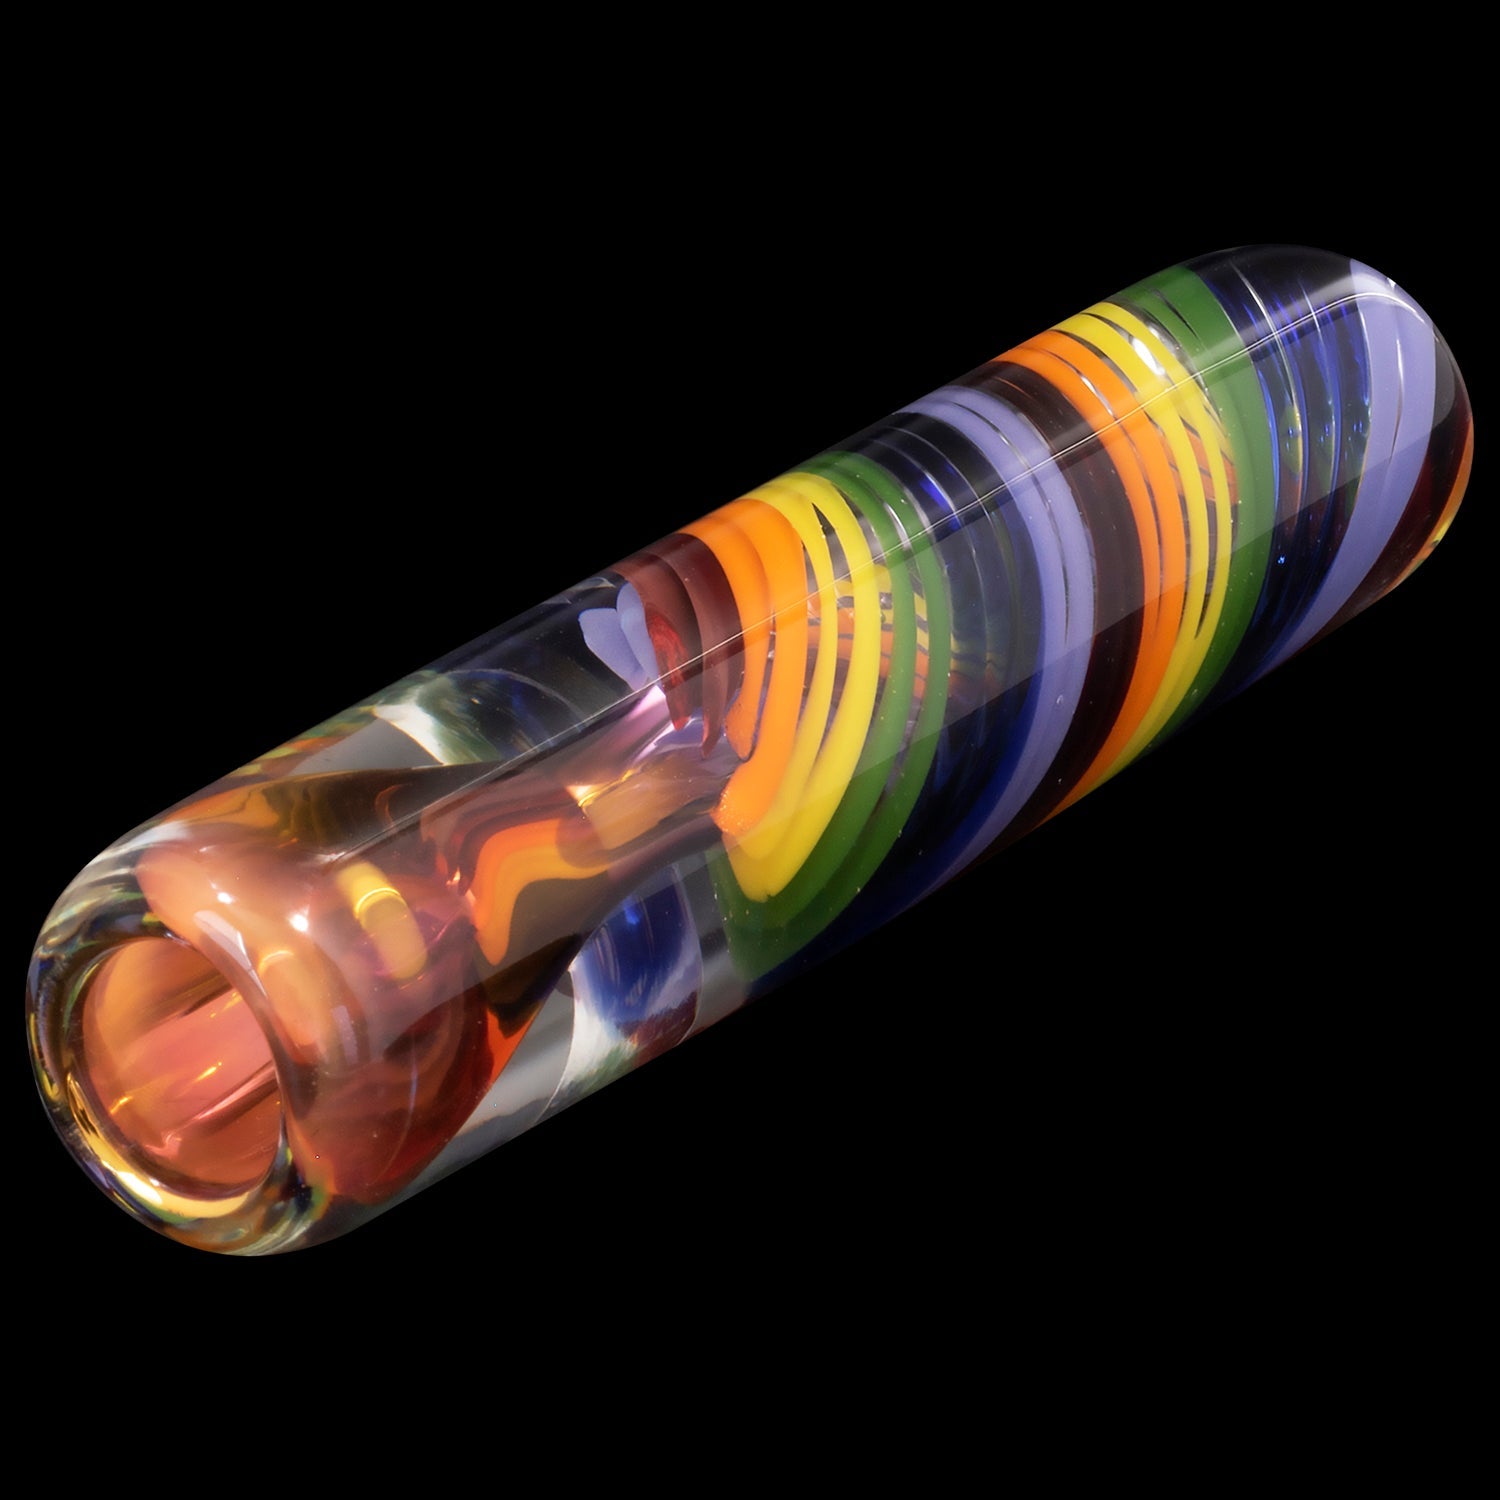 LA Pipes "Twisted Rainbow" Fumed Glass Chillum